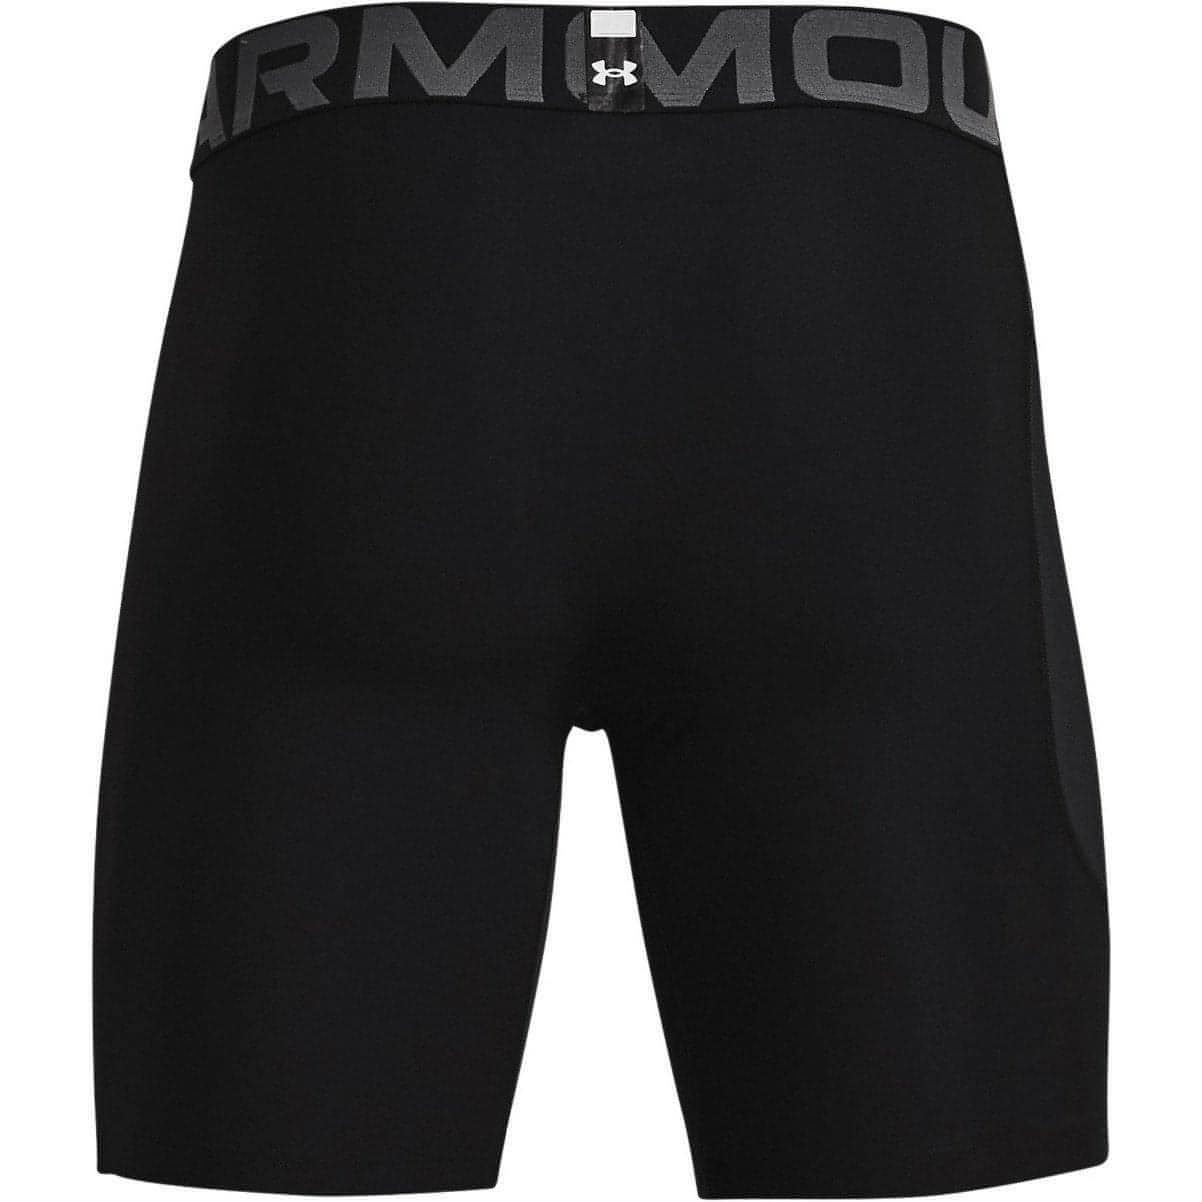 Men's Under Armour Black Spandex Half Tights Compression Shorts